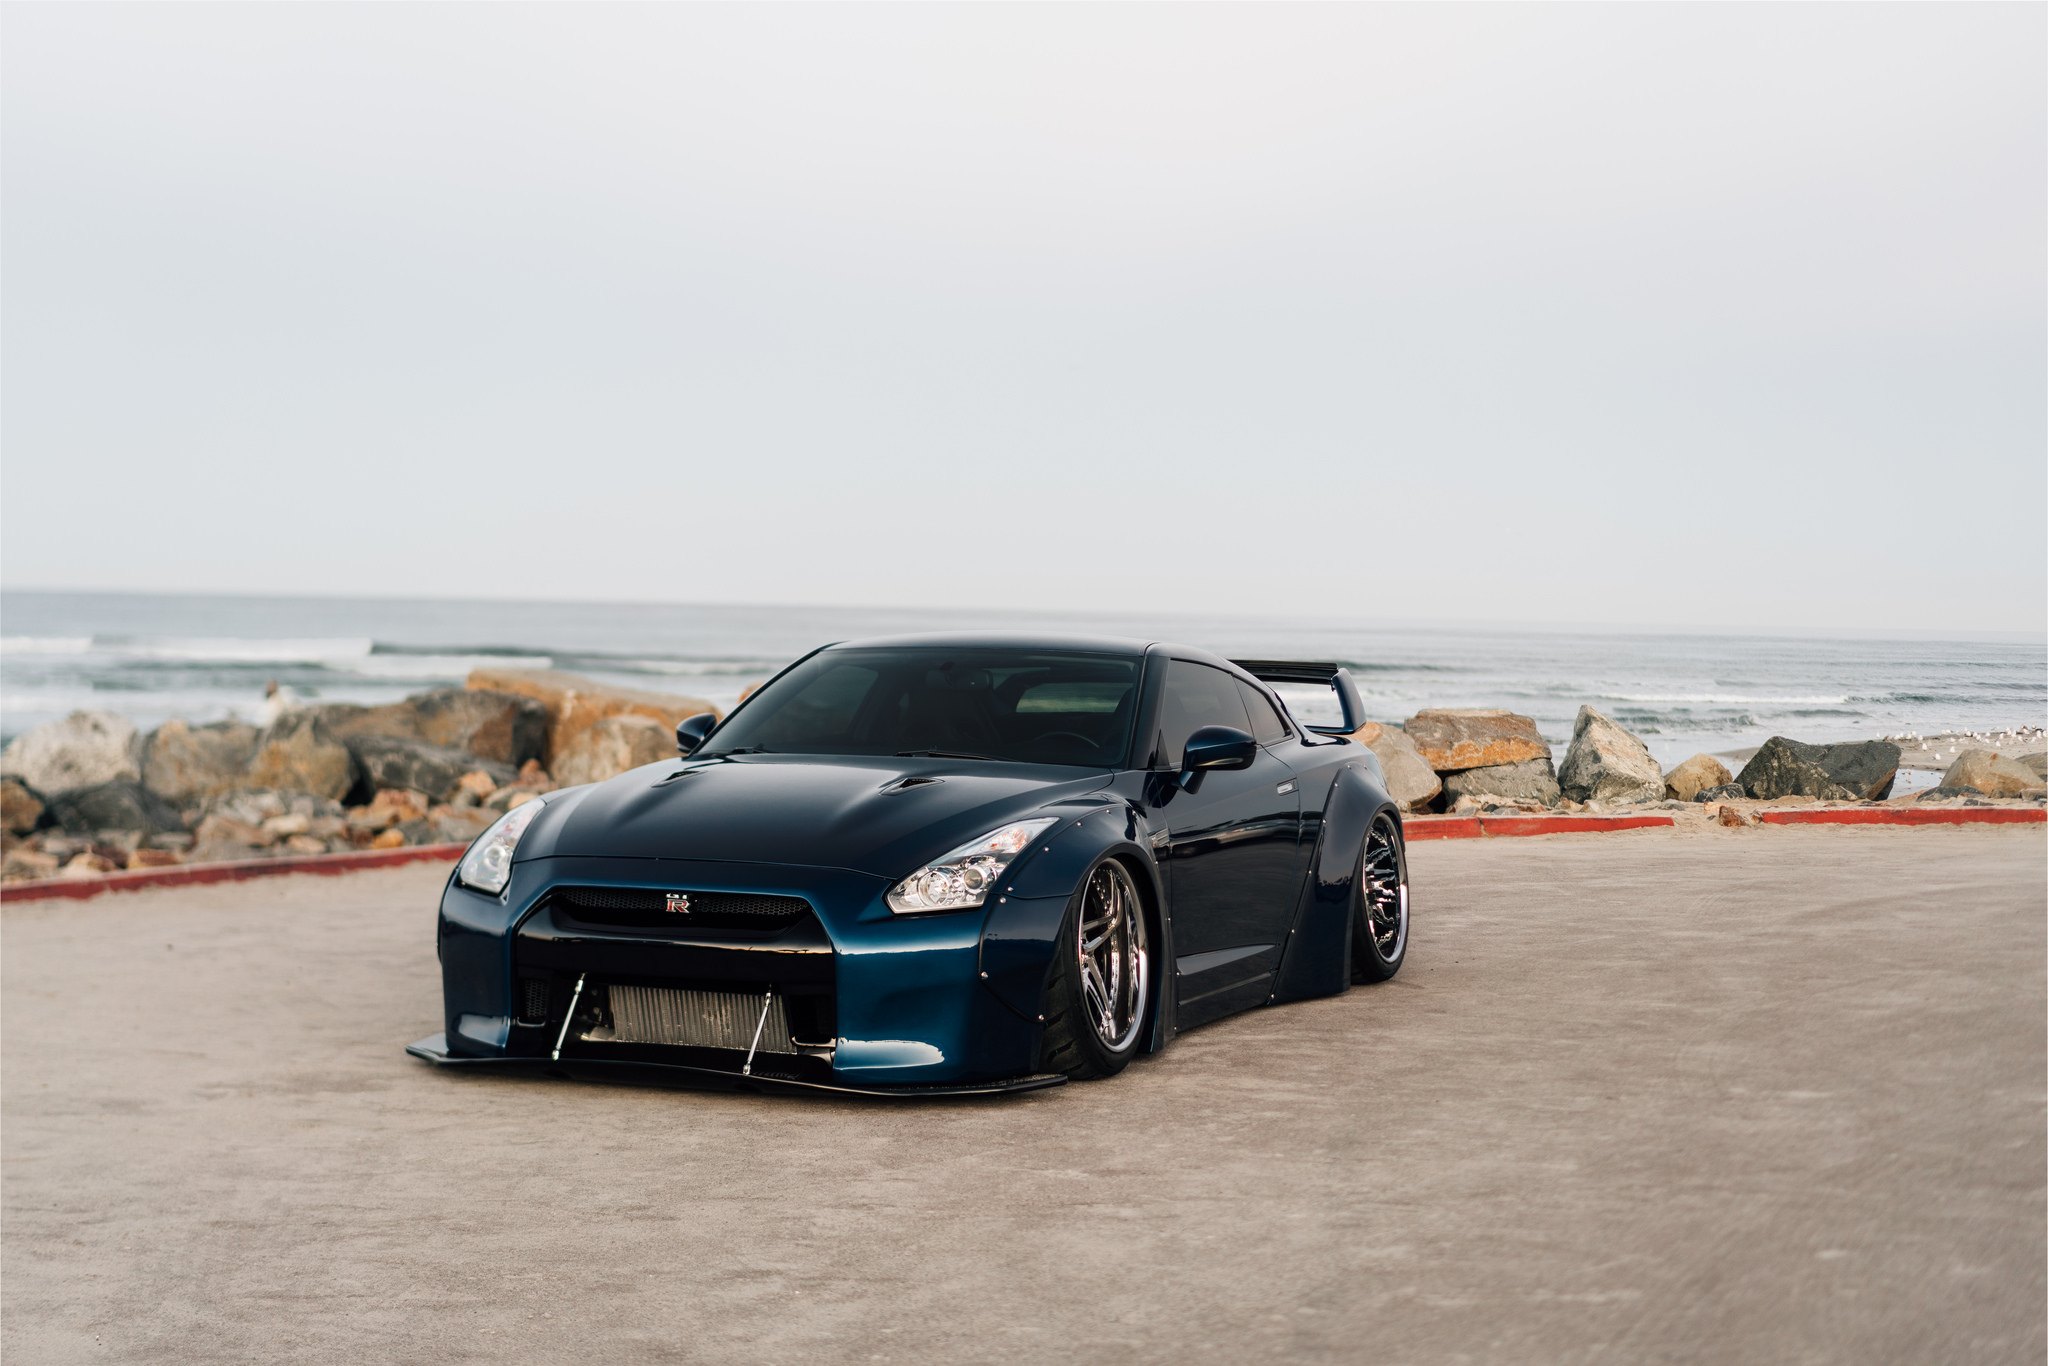 Custom Body Kit on Dark Blue Nissan GT-R - Photo by Zachary Lenfest